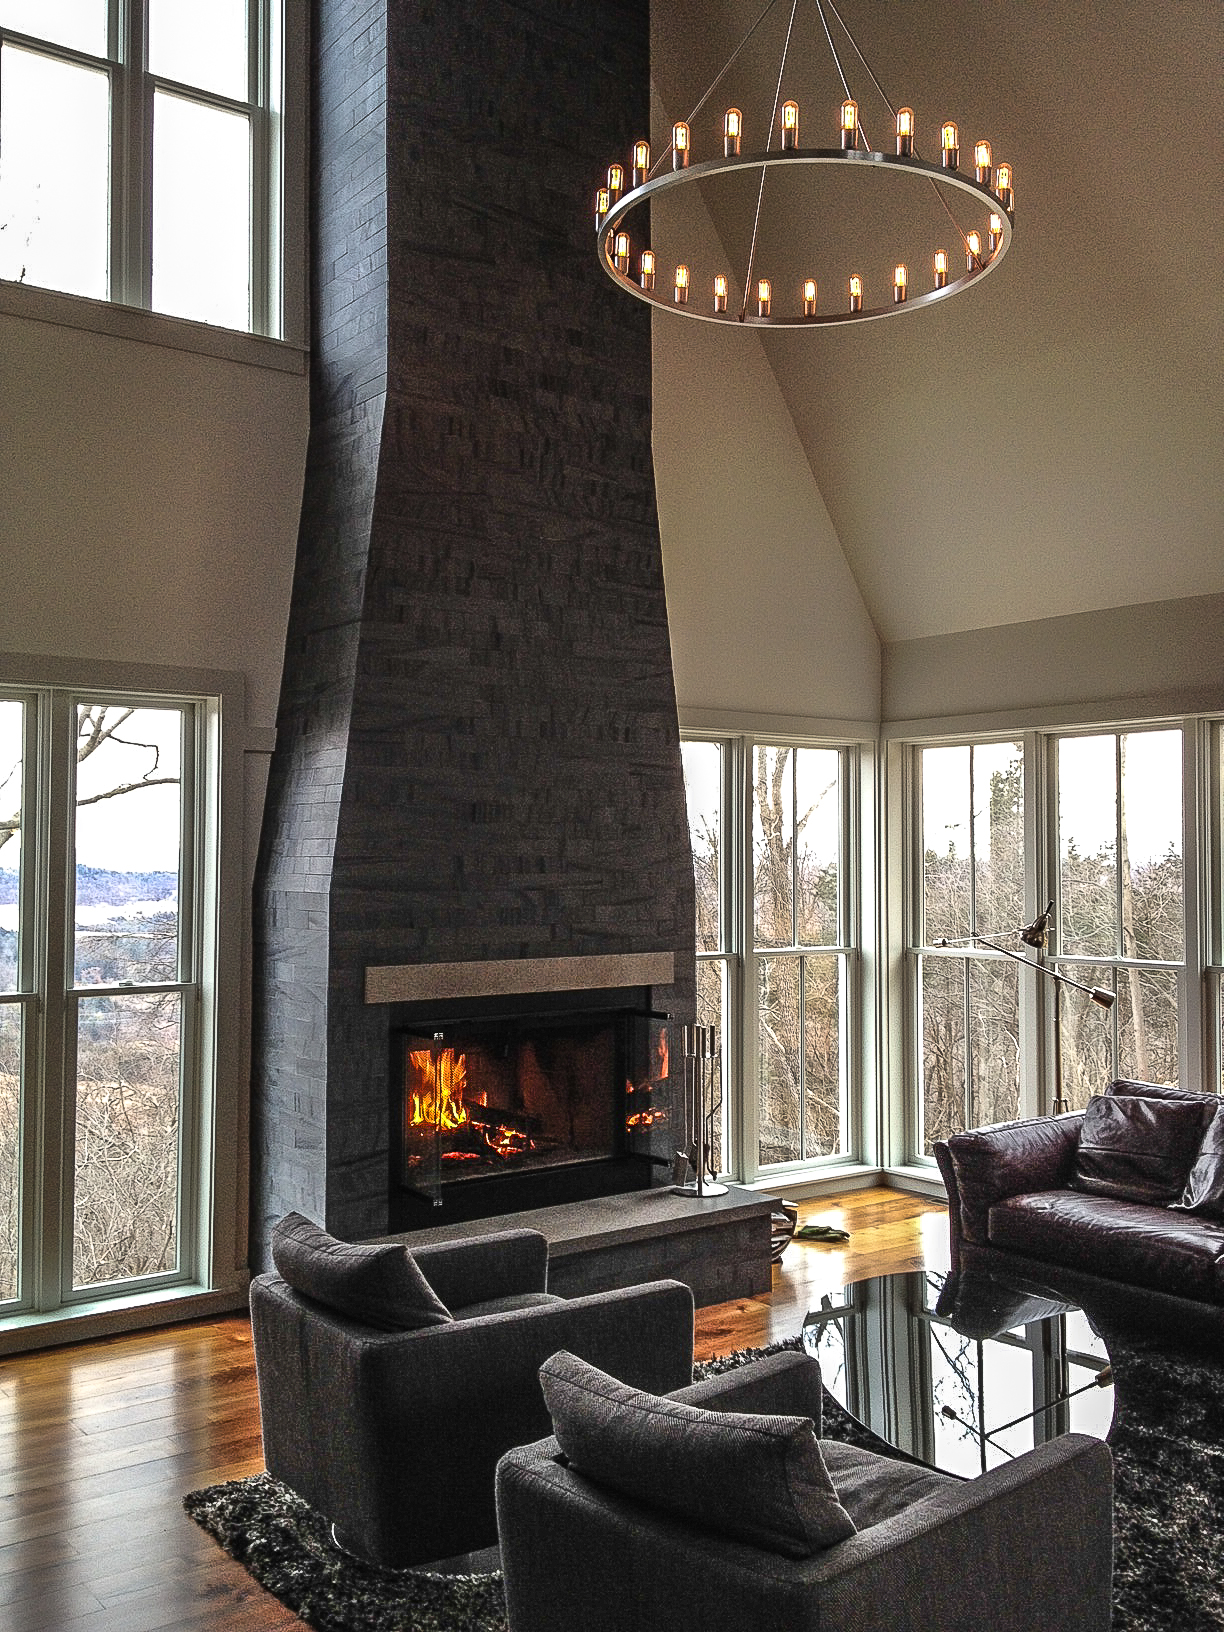 All Perfect Living Room Lighting Ideas - Interior Design ...